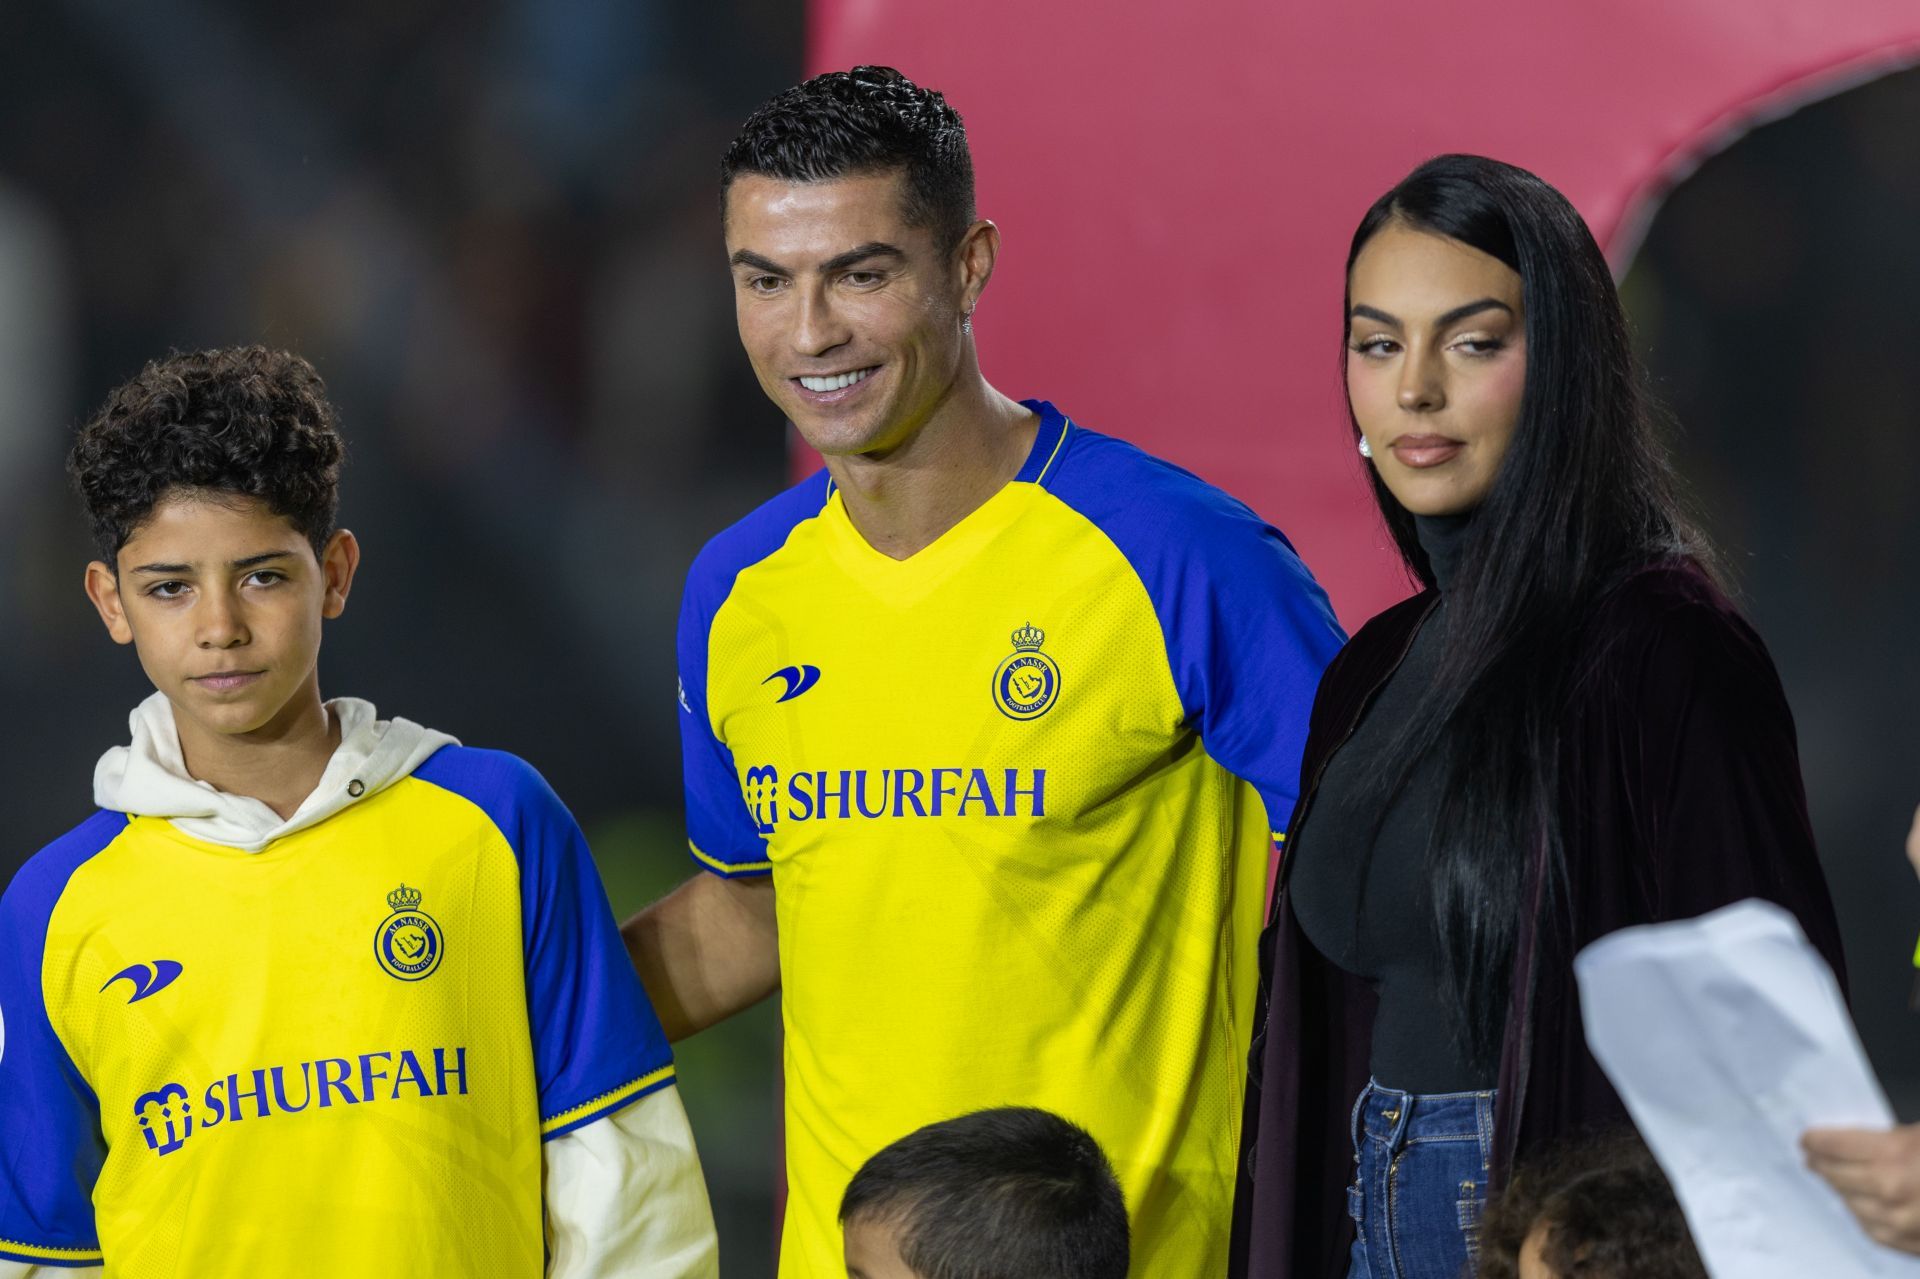 Ronaldo with his girlfriend, Georgina Rodriguez